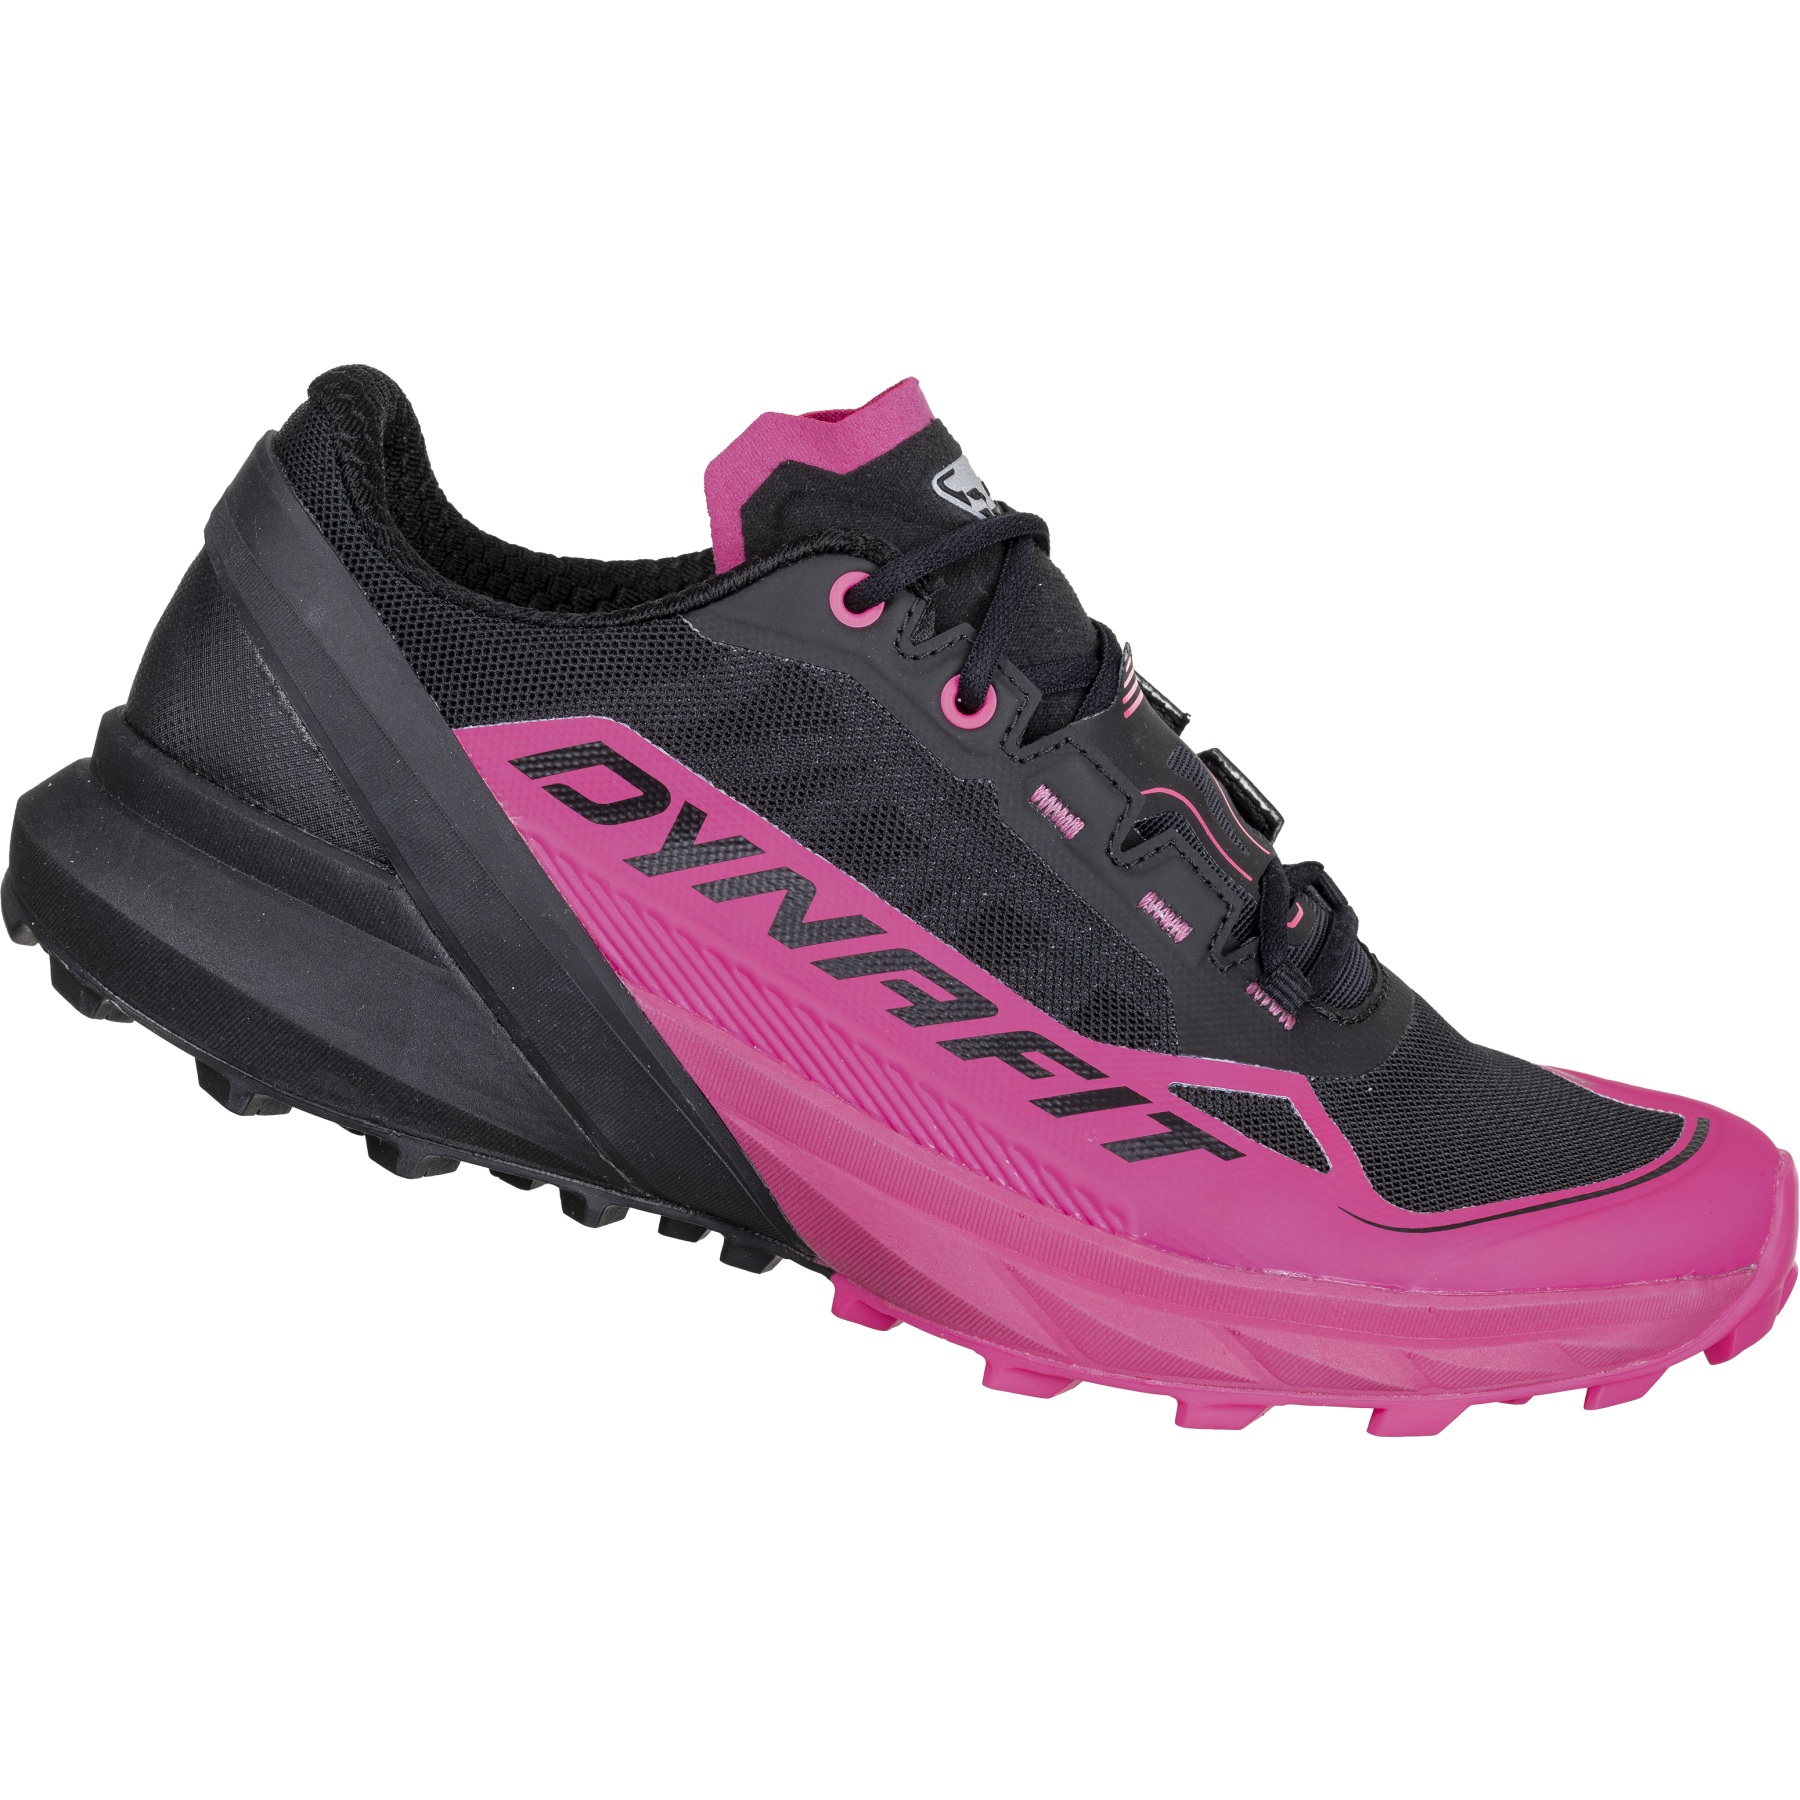 Bild von Dynafit Ultra 50 Laufschuhe Damen - Pink Glo Black Out